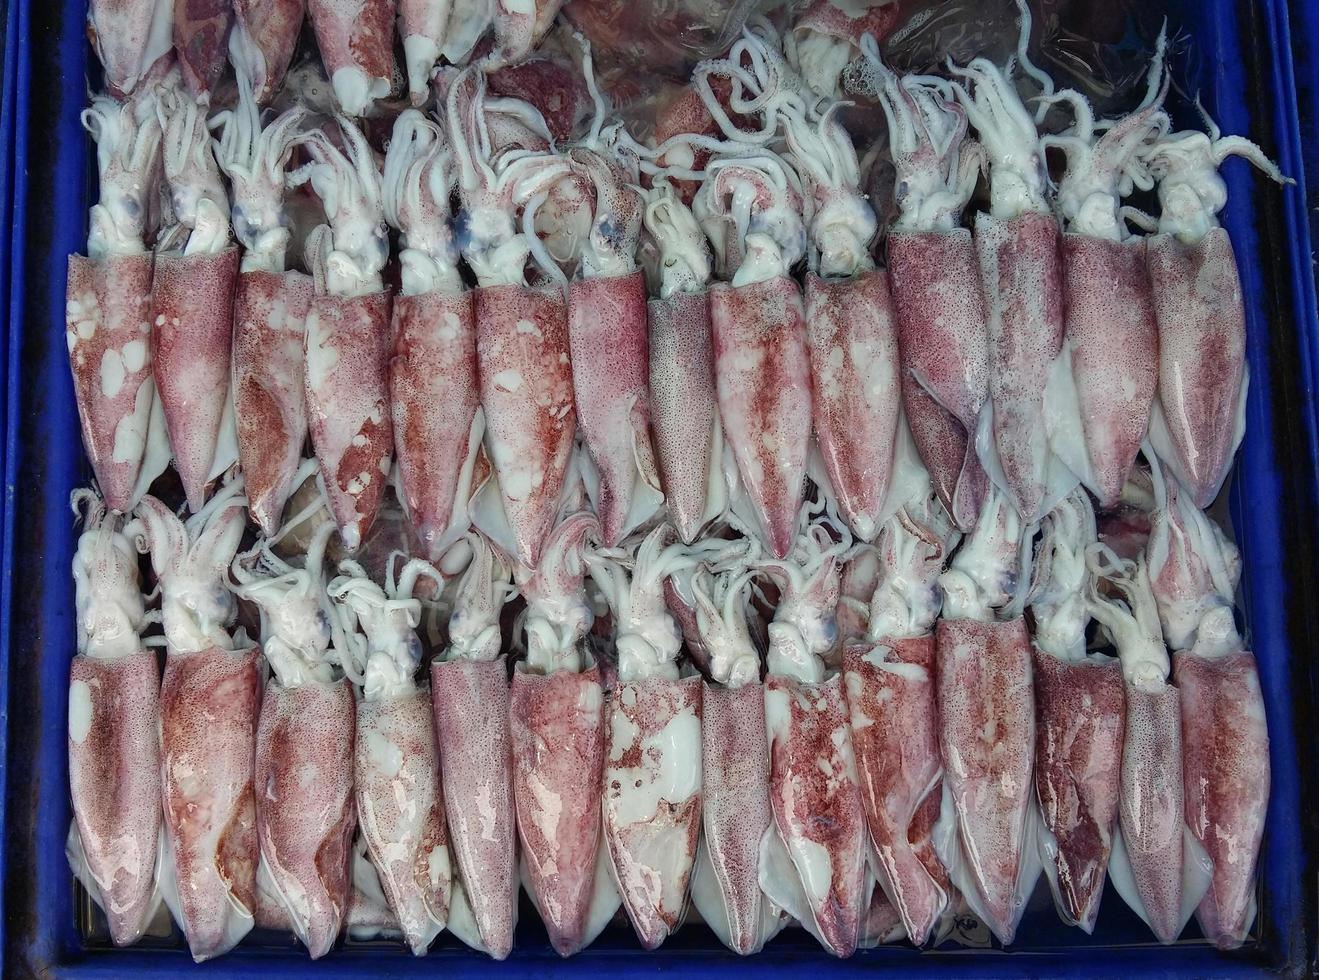 frutti di mare calamari crudi bianchi freschi in vendita nel mercato dei prodotti freschi foto